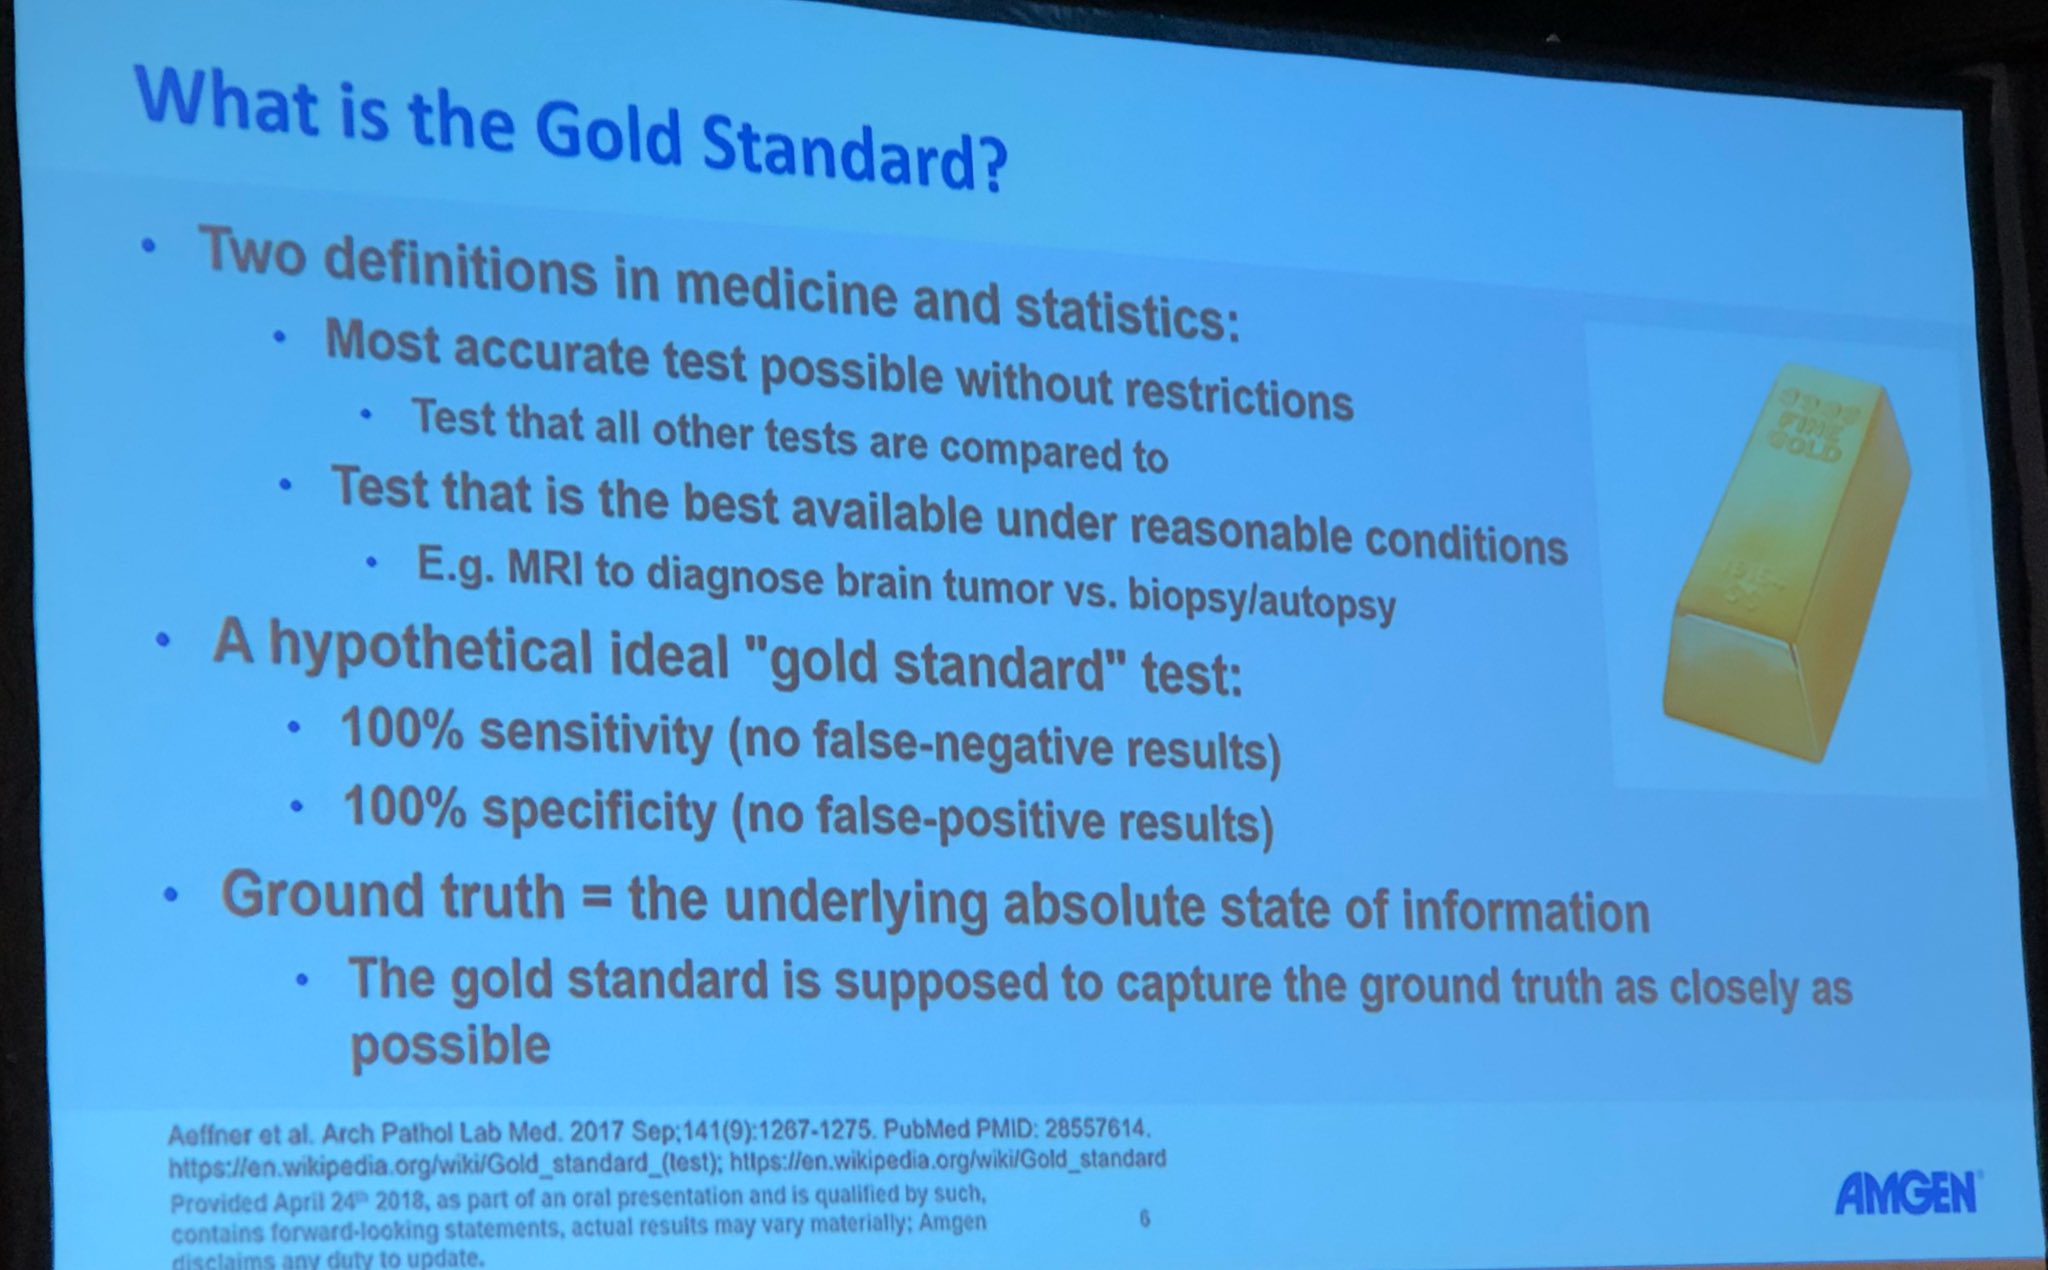 Gold standard - Wikipedia